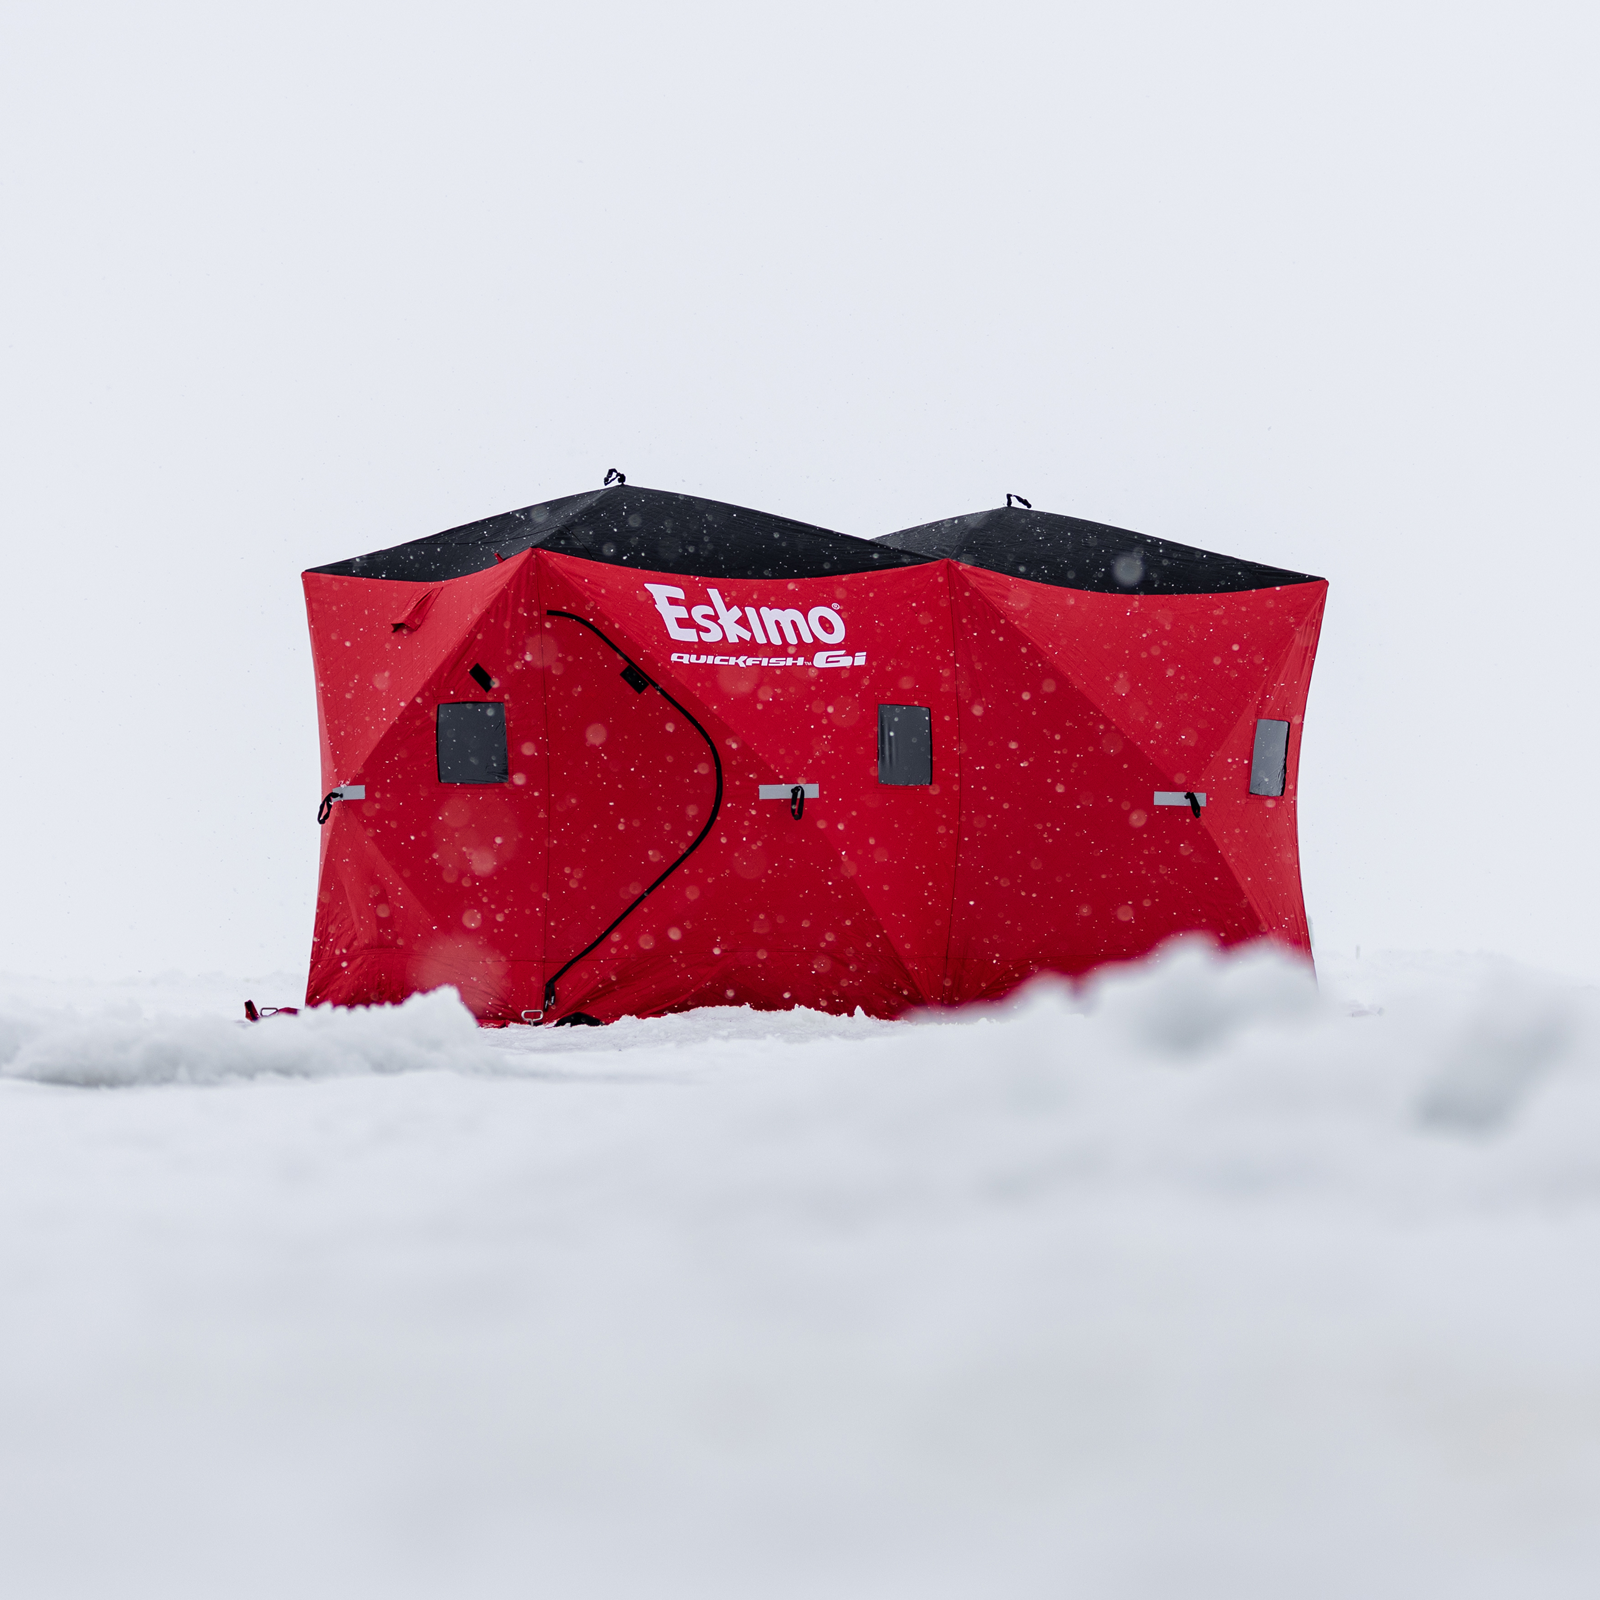 Eskimo® Plaid XL Folding Ice Chair